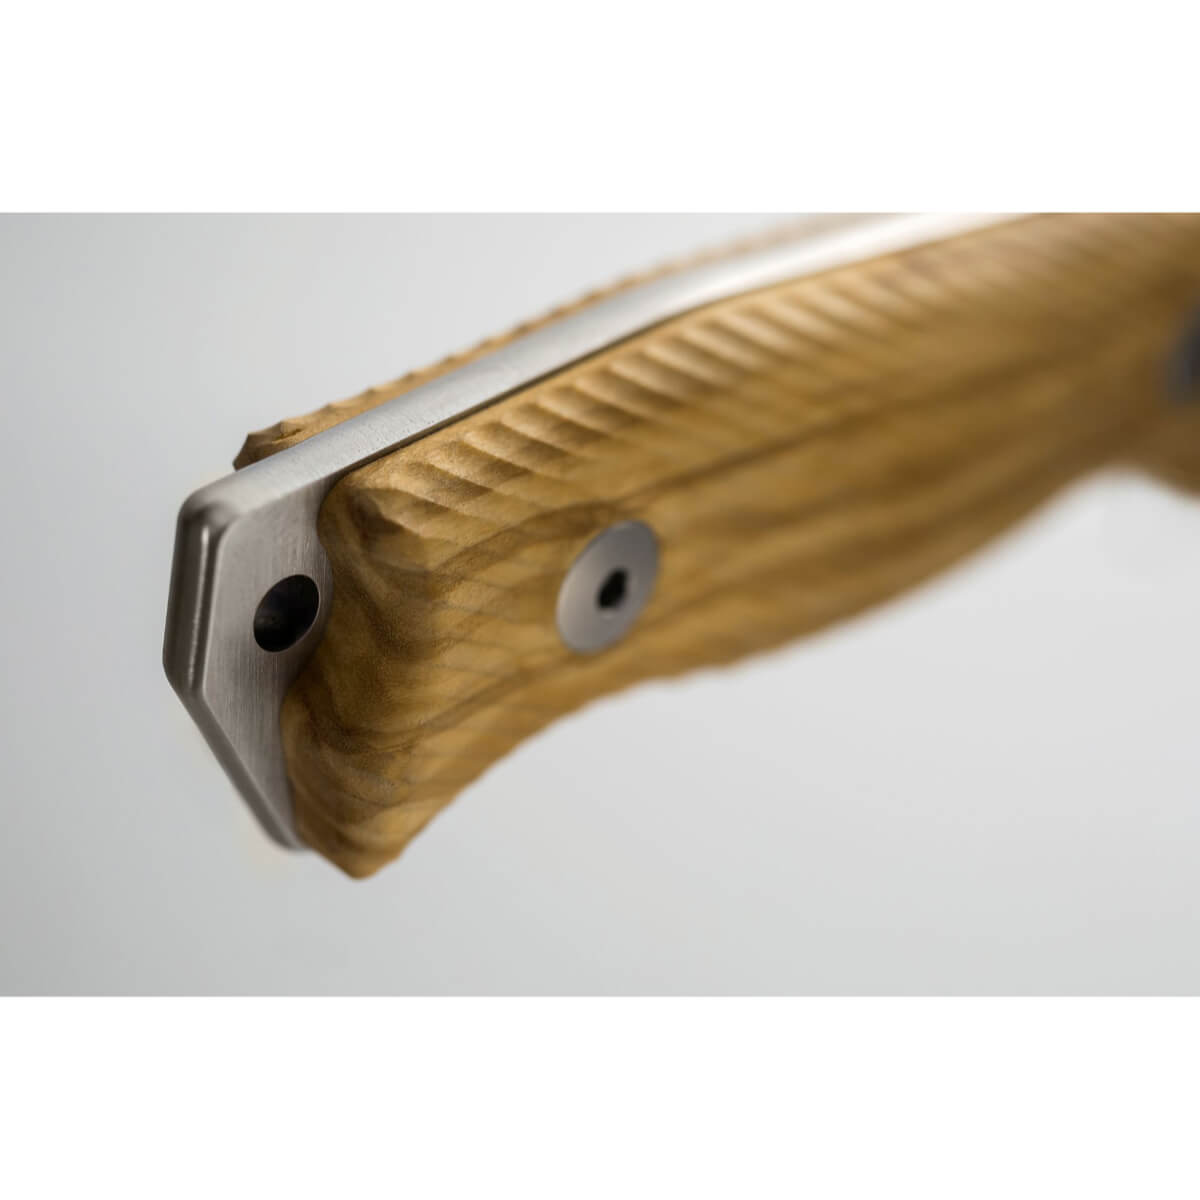 Copy of LionSteel M5 Knife - Olive Wood